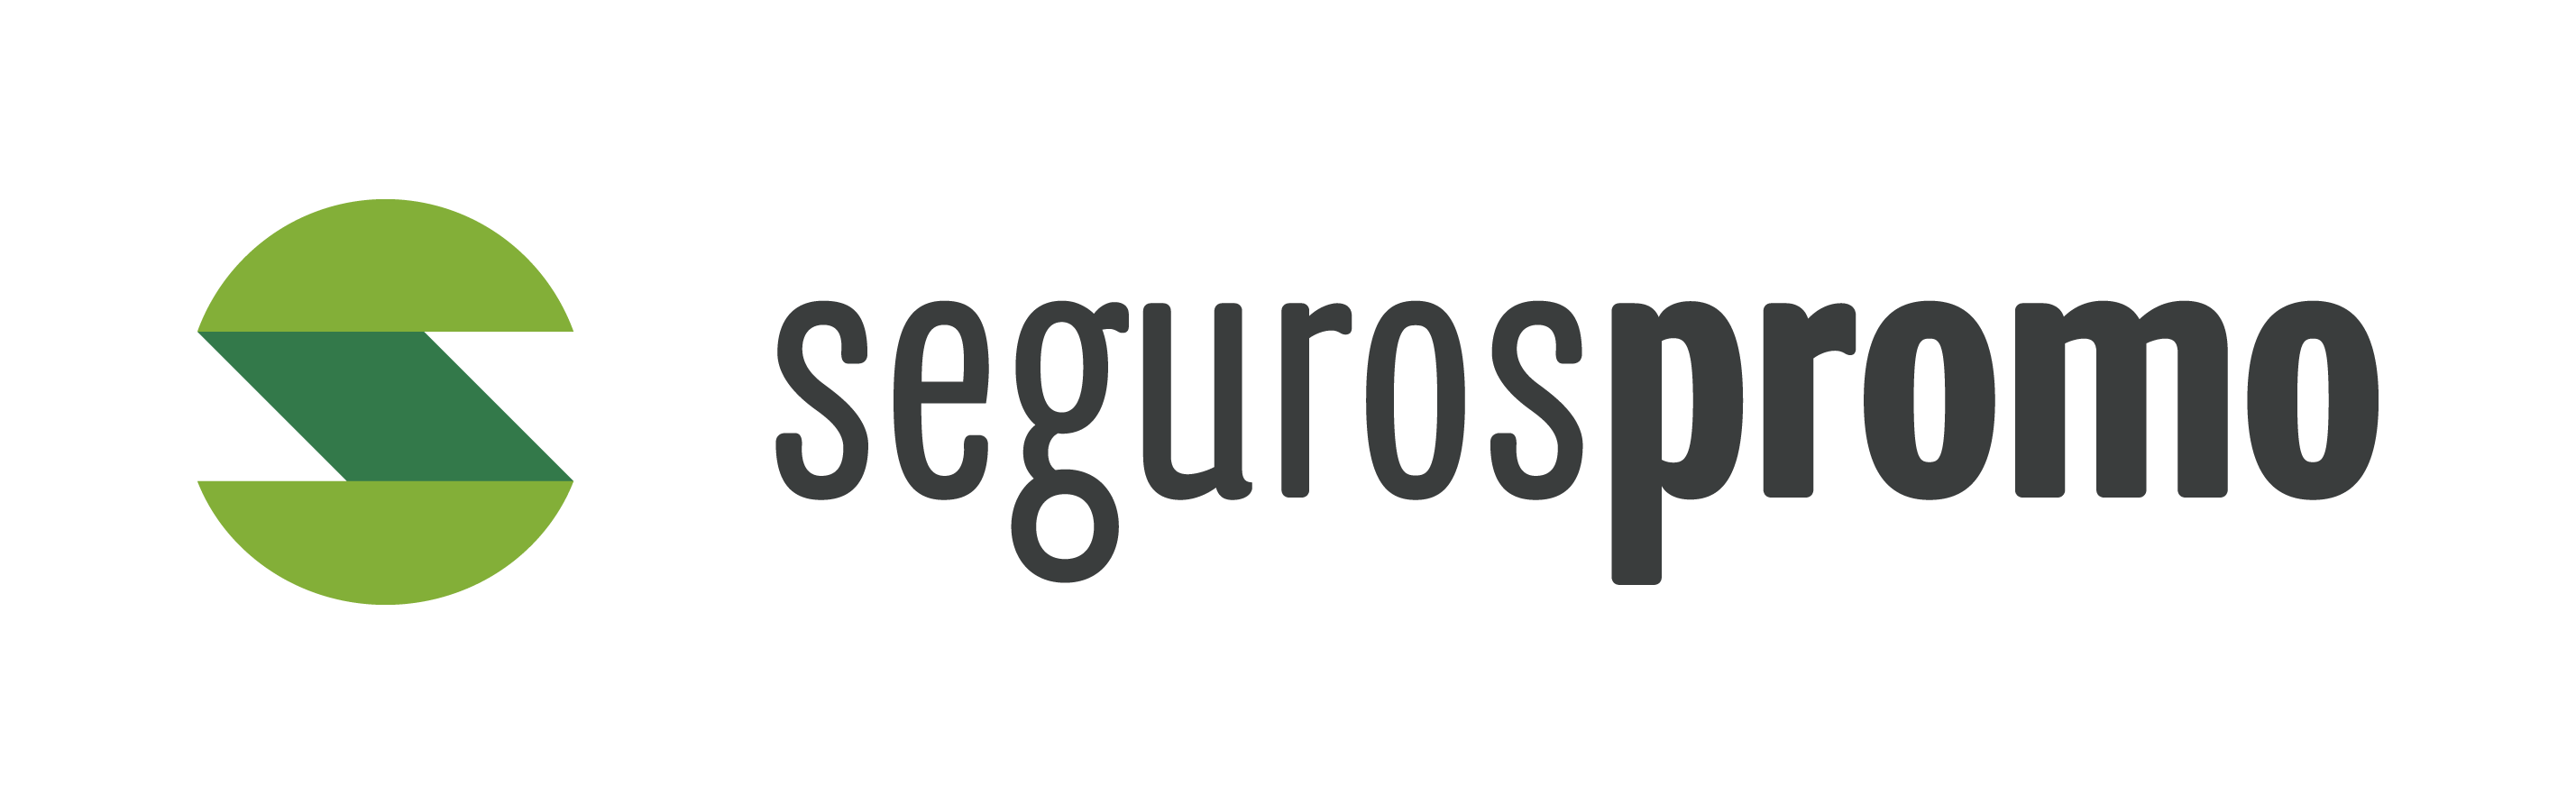 Seguros Promo: Your Convenient Online Destination for Travel Insurance Comparison and Purchase